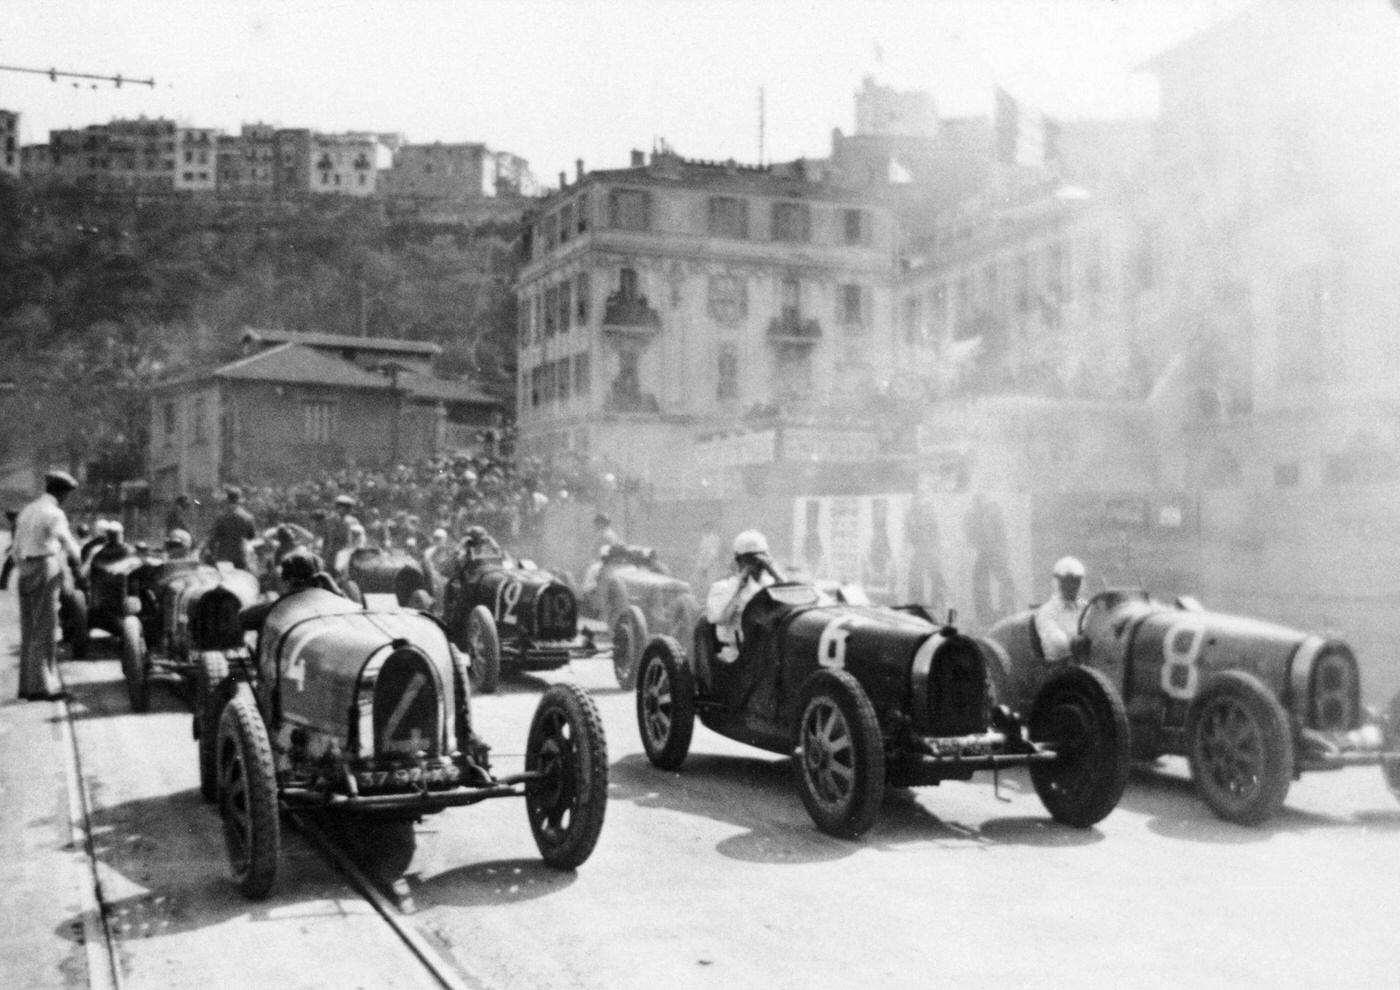 Monaco Grand Prix, 1929. The first Monaco Grand Prix was staged on the 14th April 1929, and was won by Grover-Williams in a Bugatti.